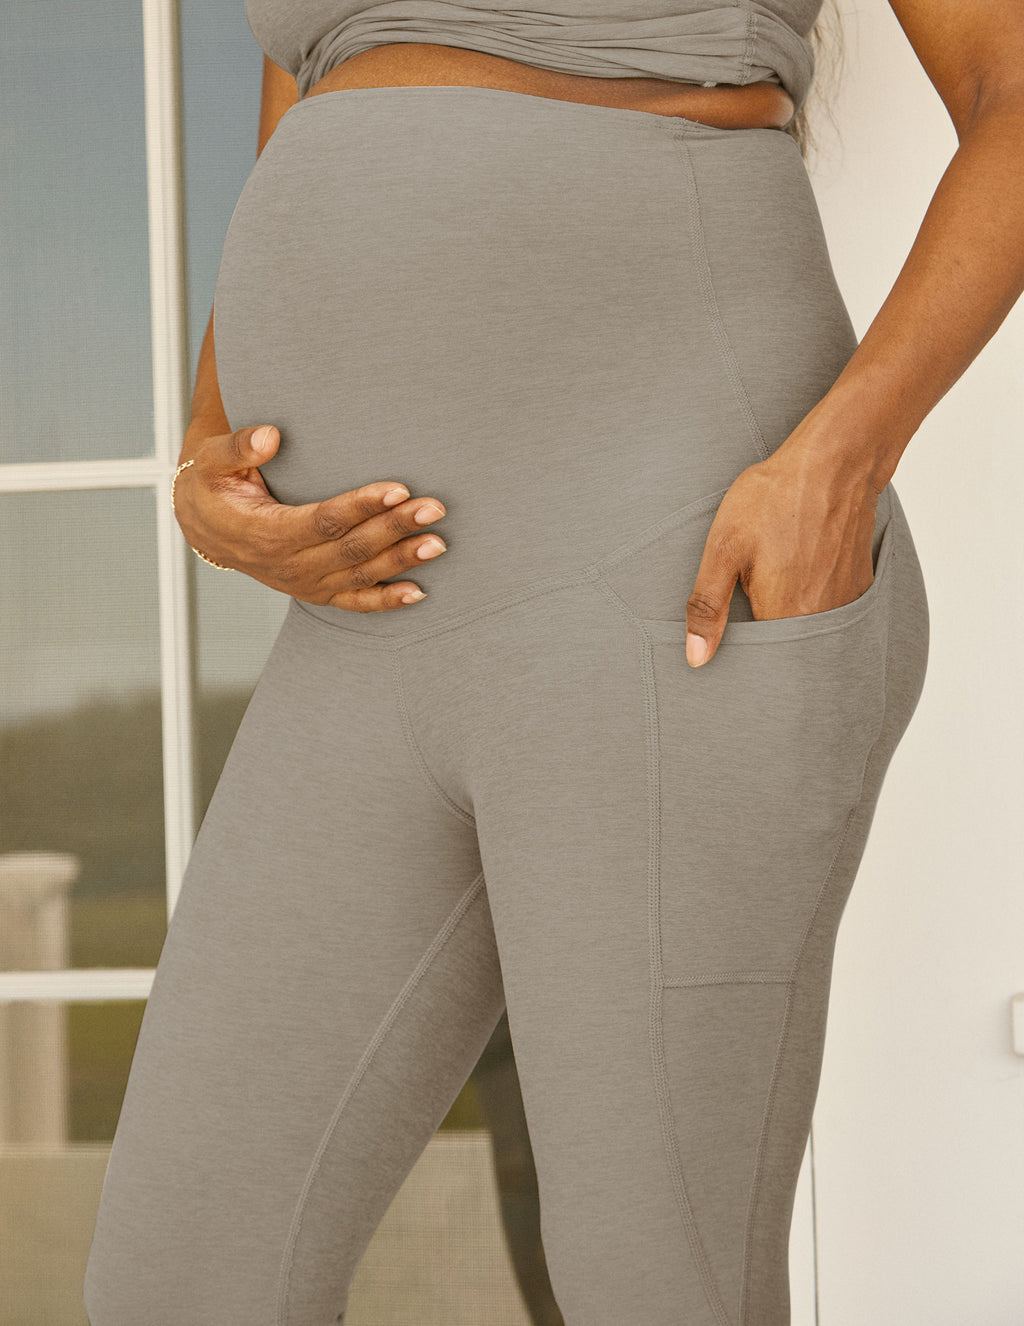 Maternity Leggings, Yoga Pants and Bottoms